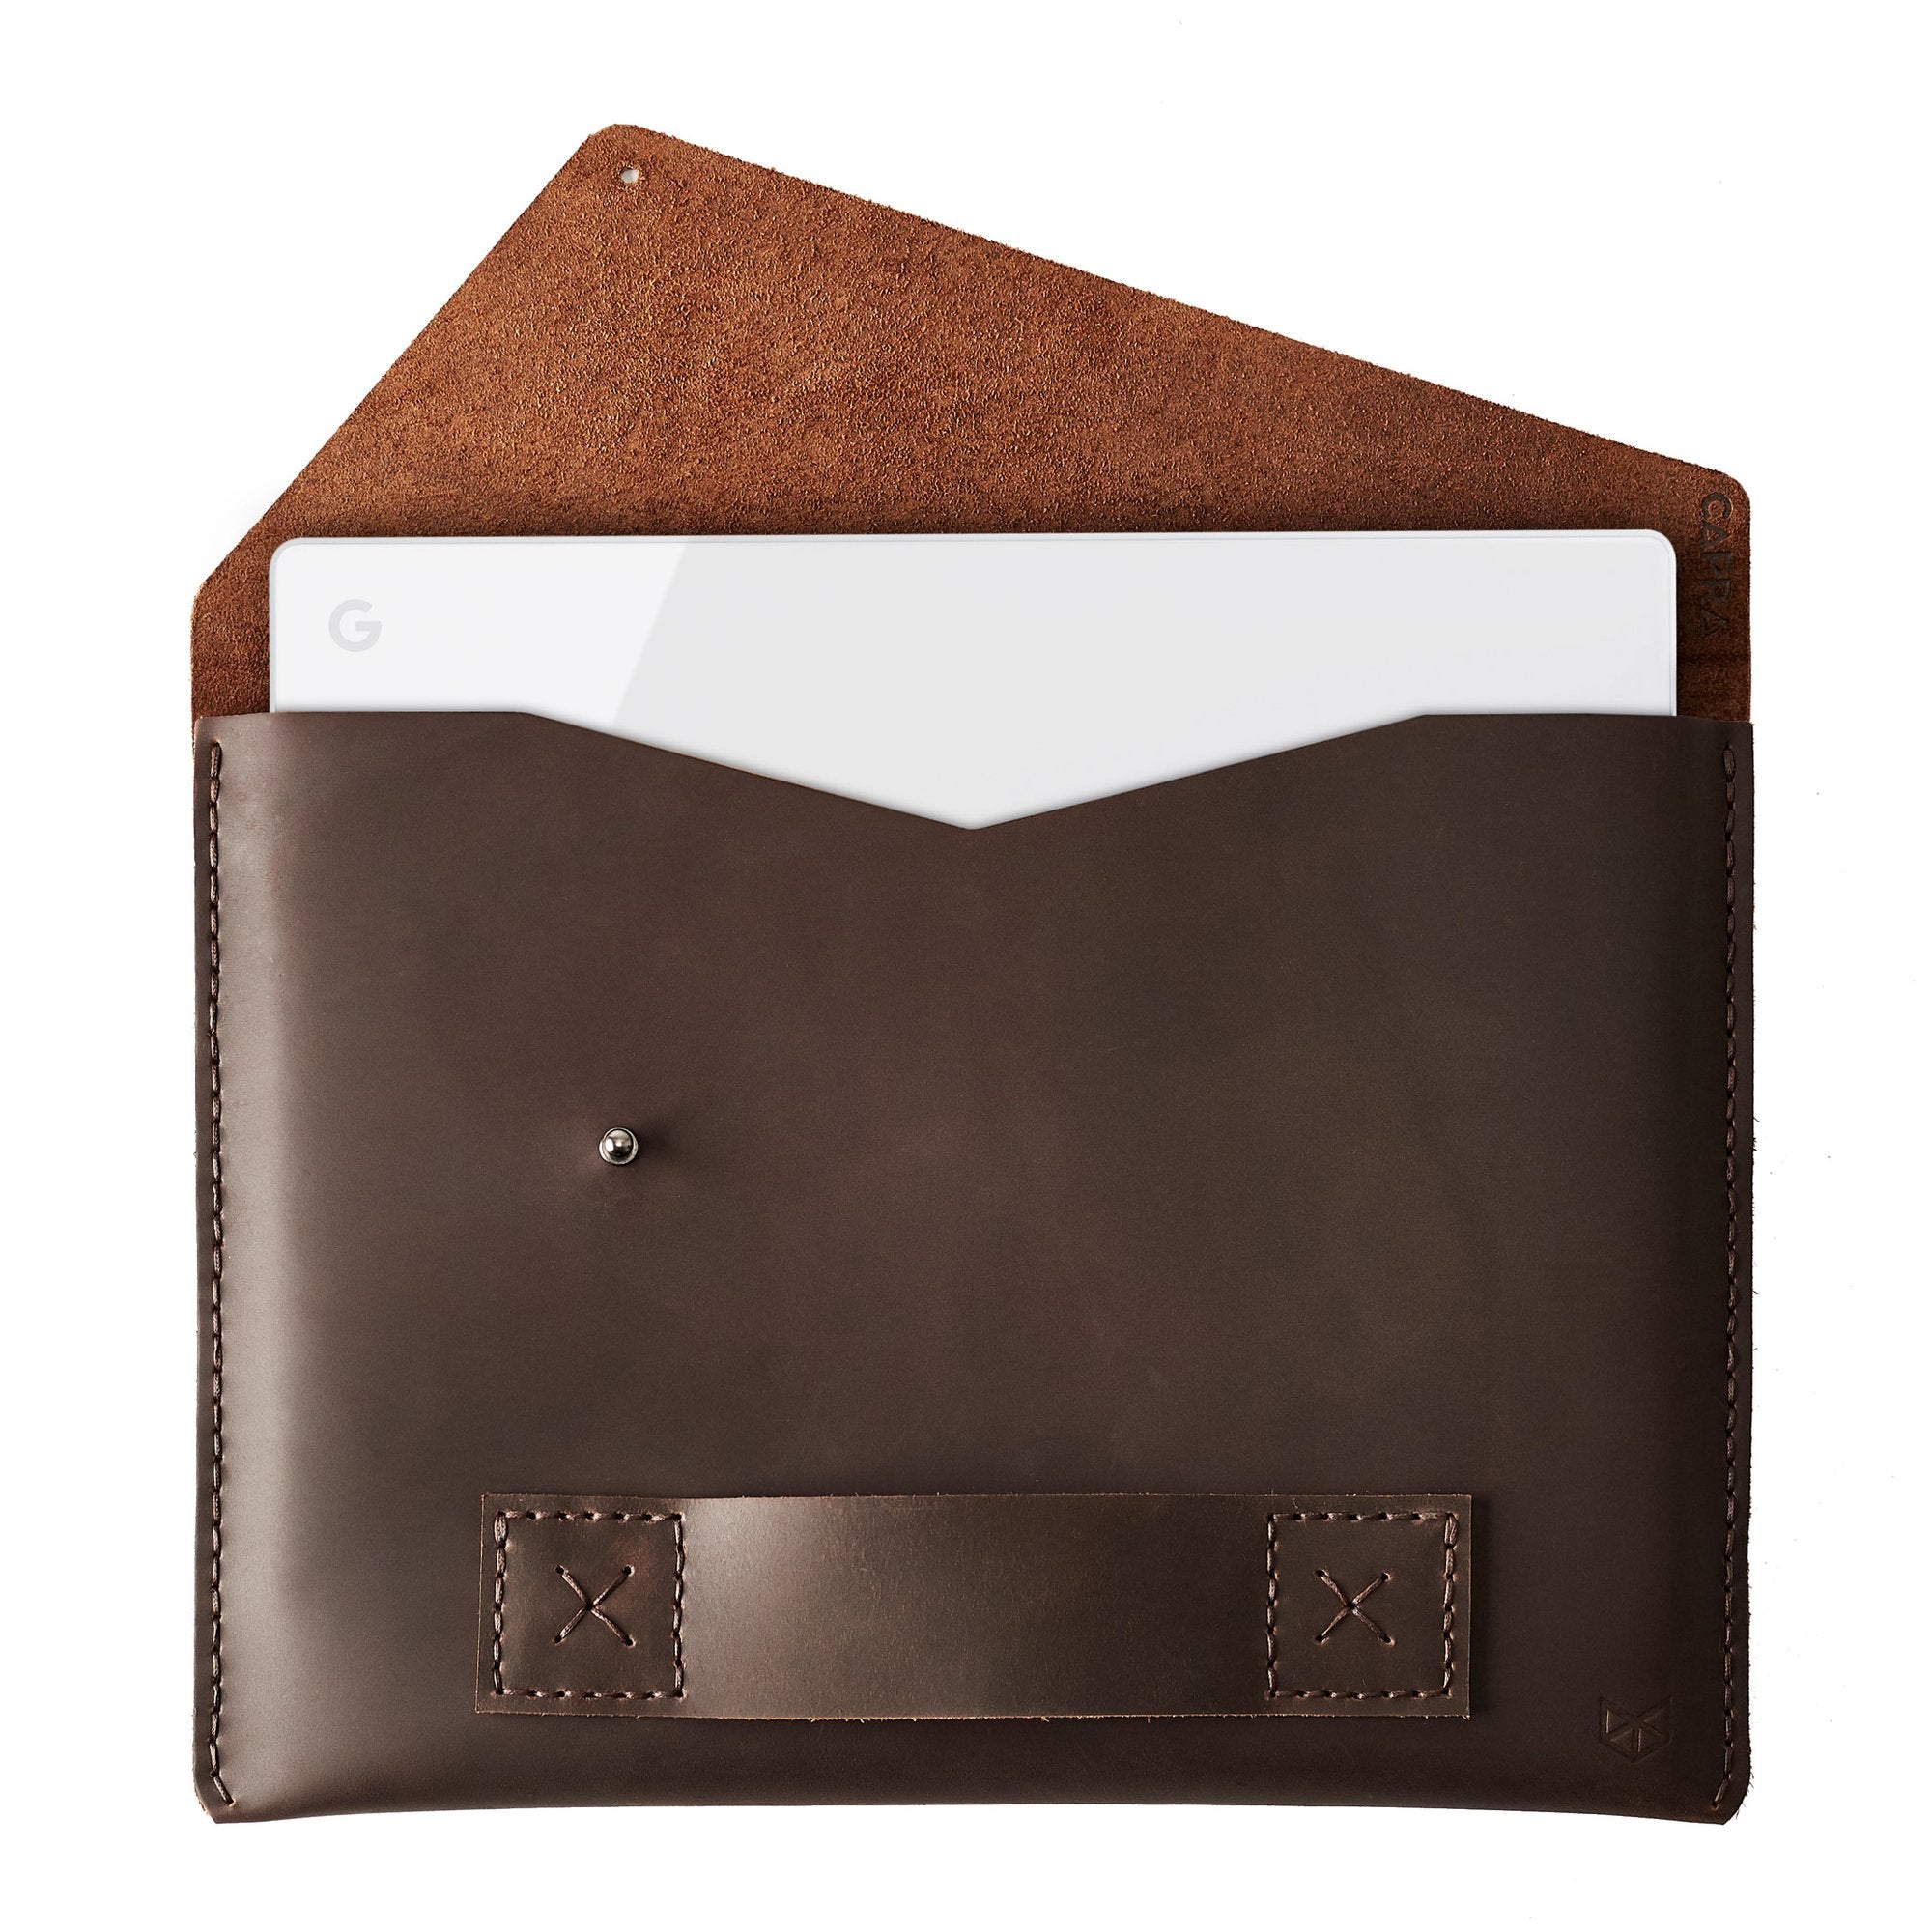 Open. Google Pixelbook brown leather case with pen holder. Pixelbook laptop mens folio